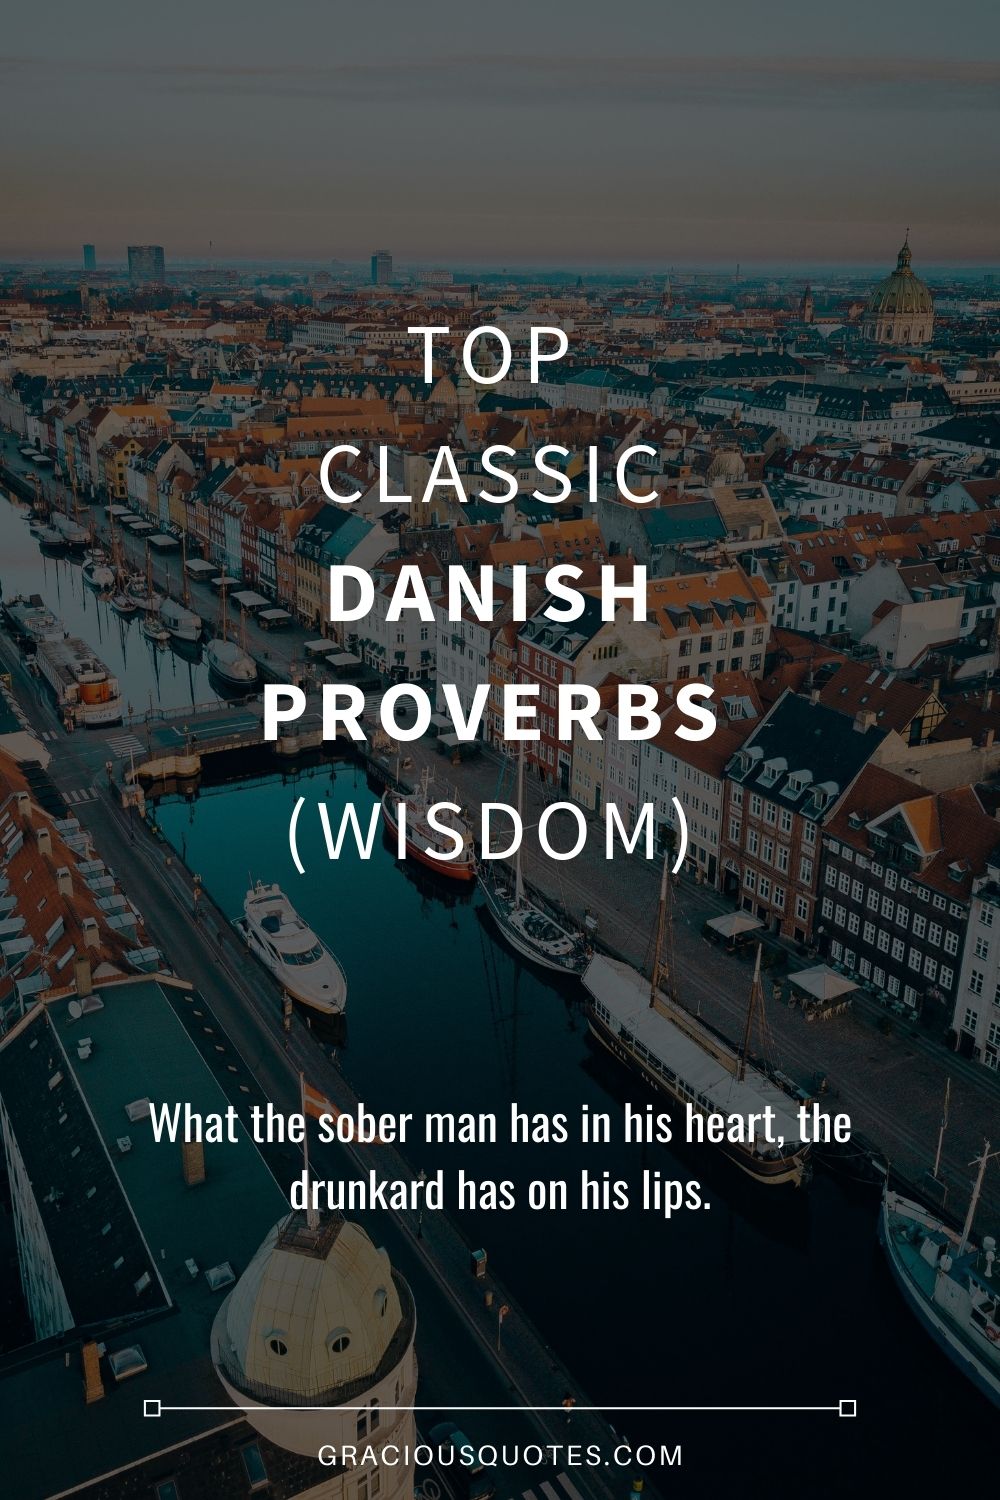 Top Classic Danish Proverbs (WISDOM) - Gracious Quotes